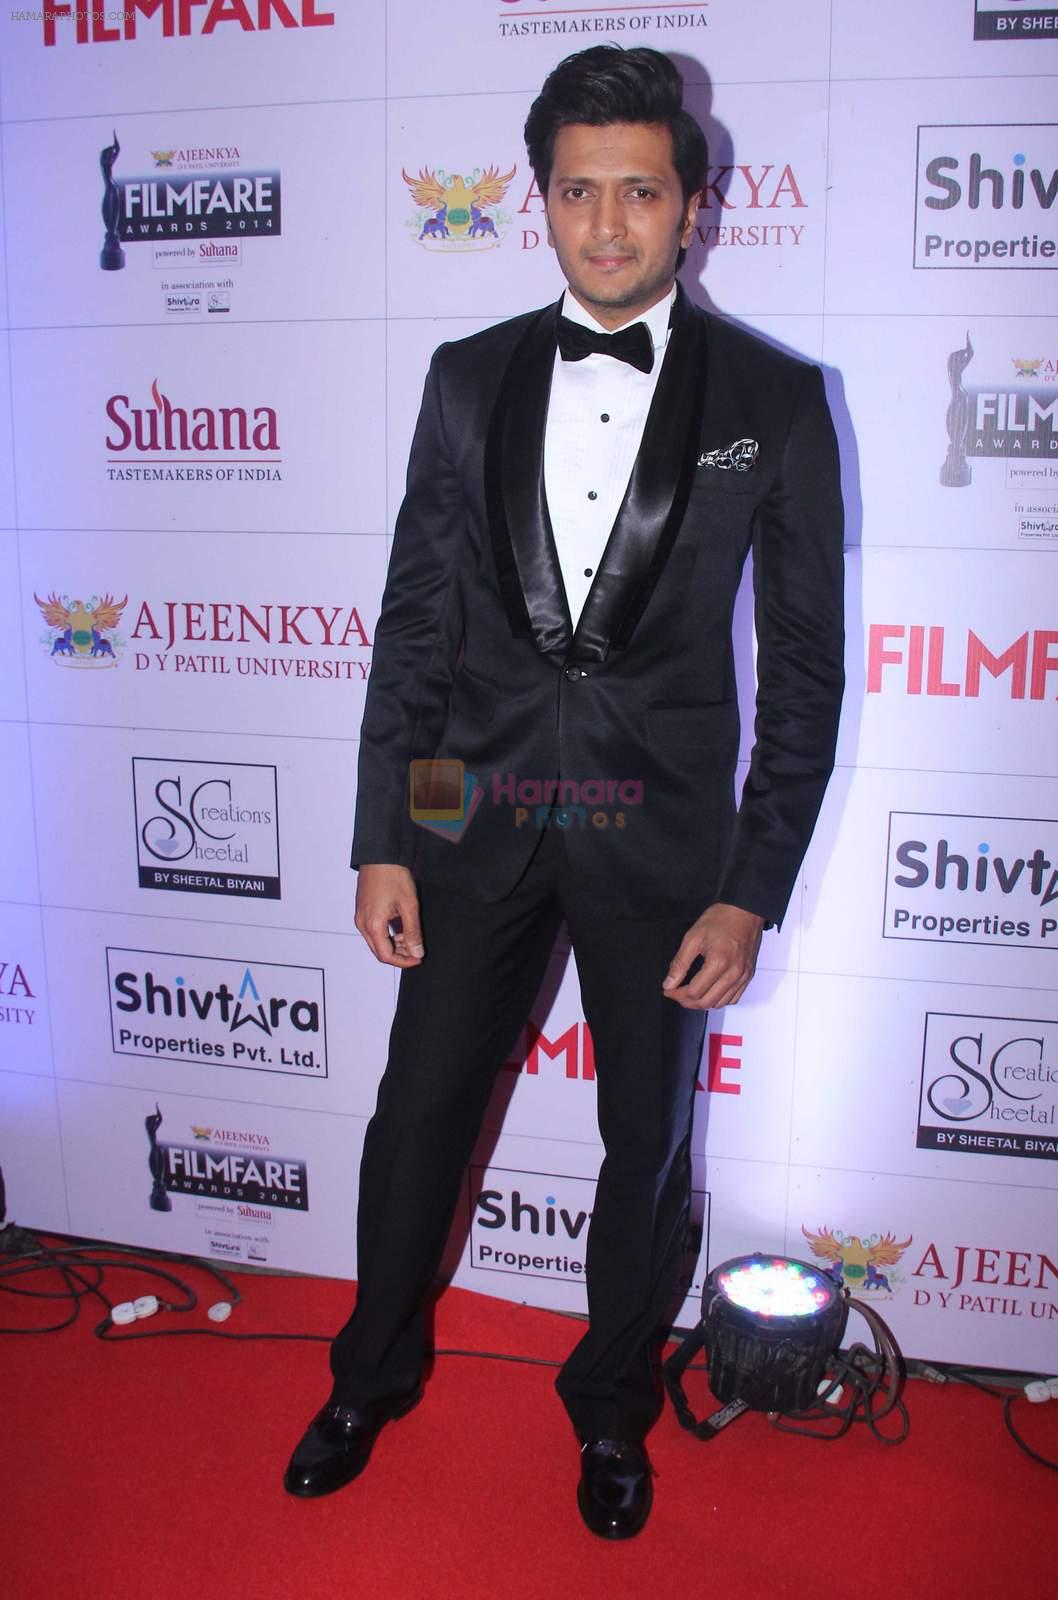 Riteish Deshmukh at the Red Carpet of _Ajeenkya DY Patil University Filmfare Awards